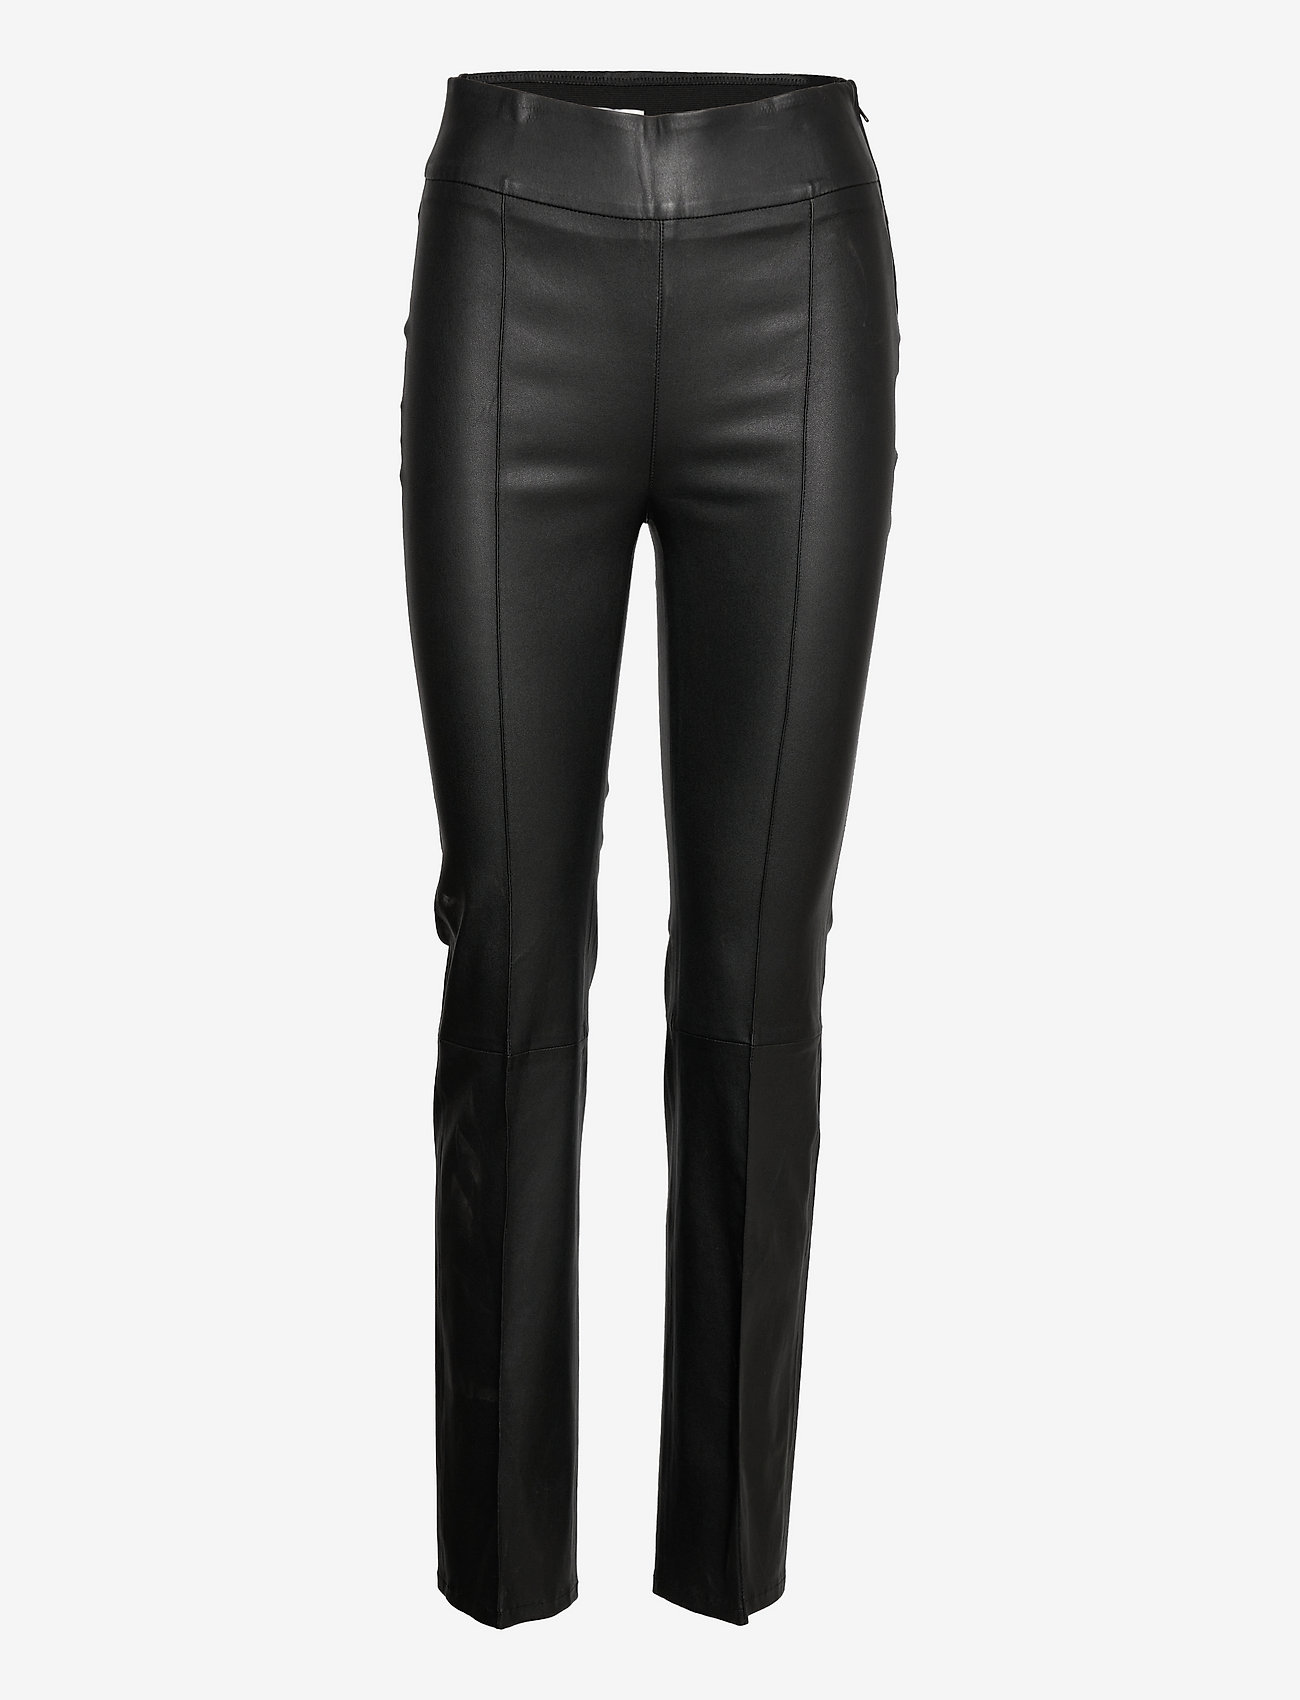 Dante6 Fyen Stretch Leather Pants - Trousers | Boozt.com